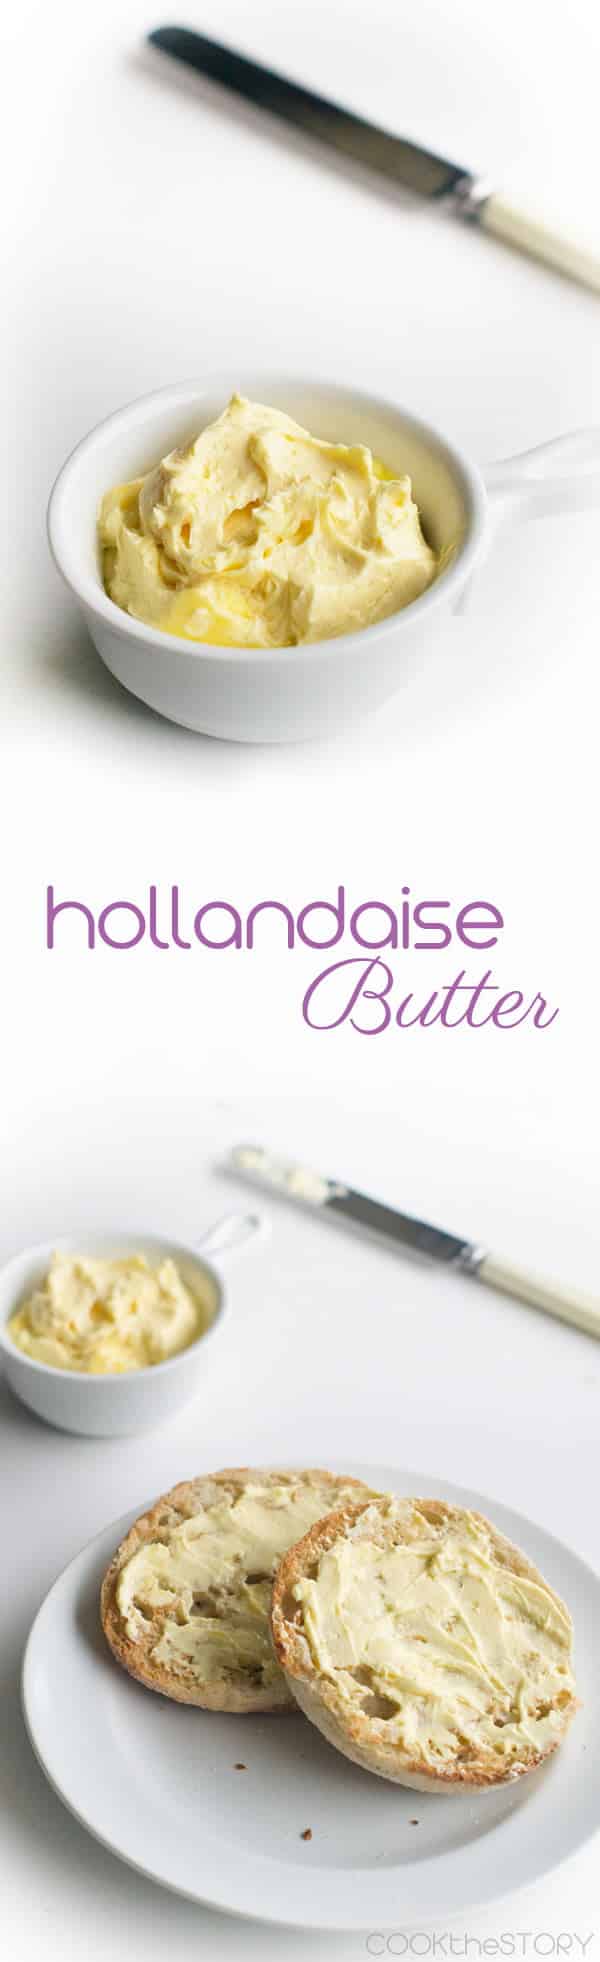 Hollandaise Butter Made from Leftover Hollandaise Sauce